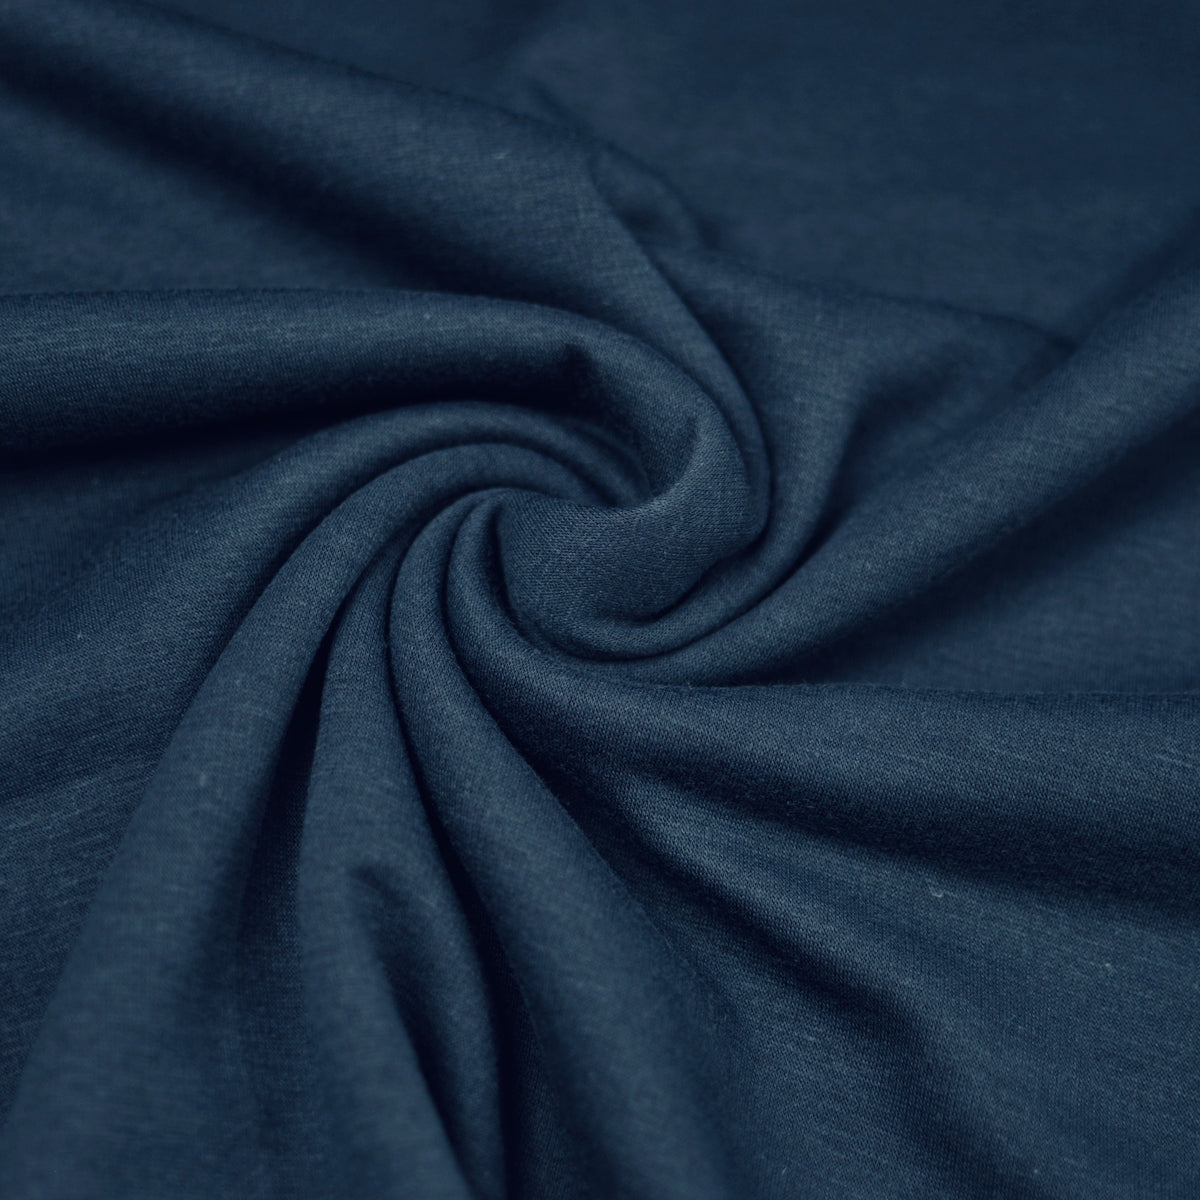 Alpenfleece - dunkelblau Navy Fabric poshpinks